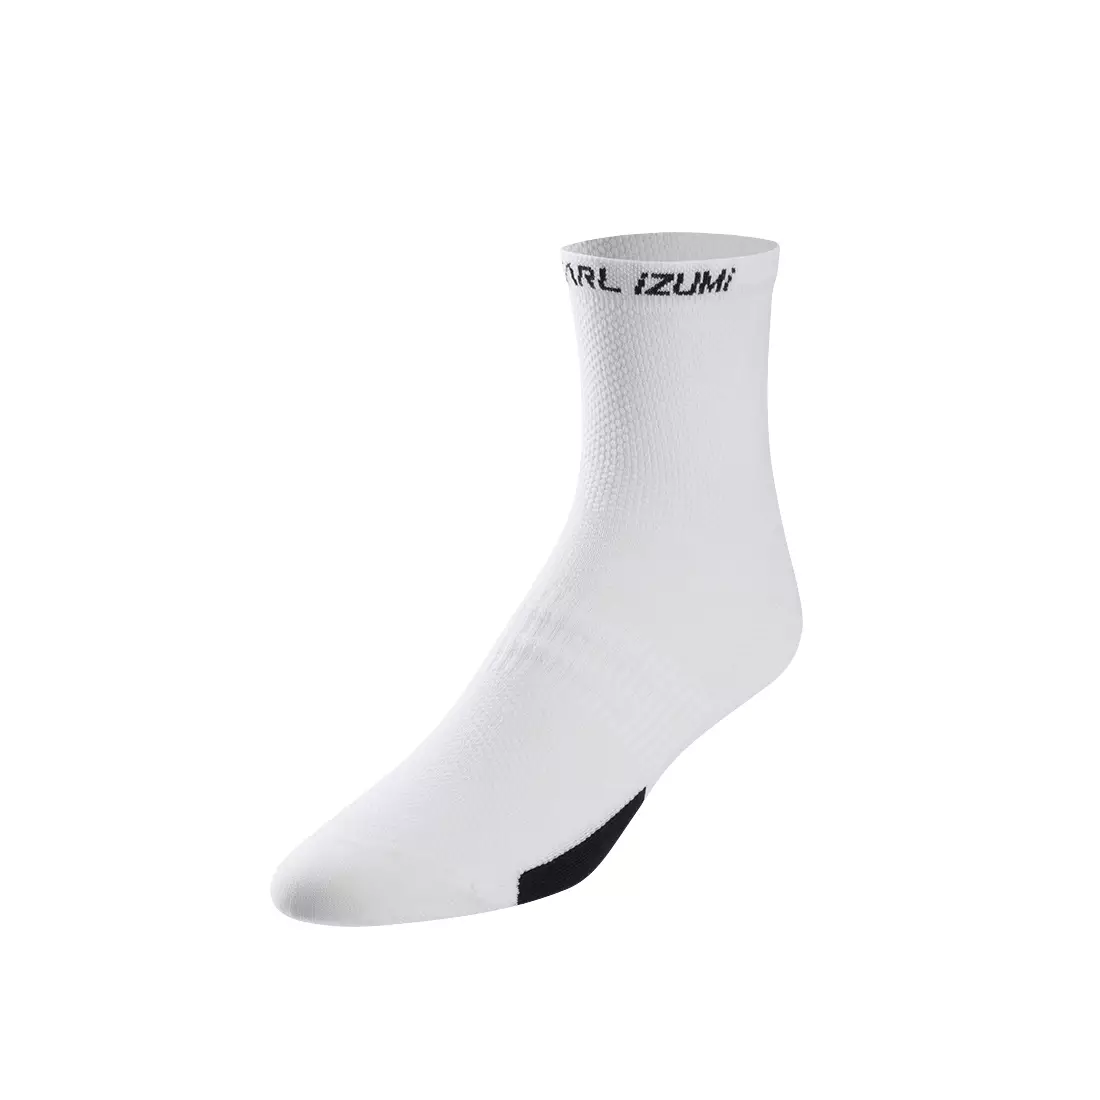 PEARL IZUMI ELITE men's cycling socks white 14151801